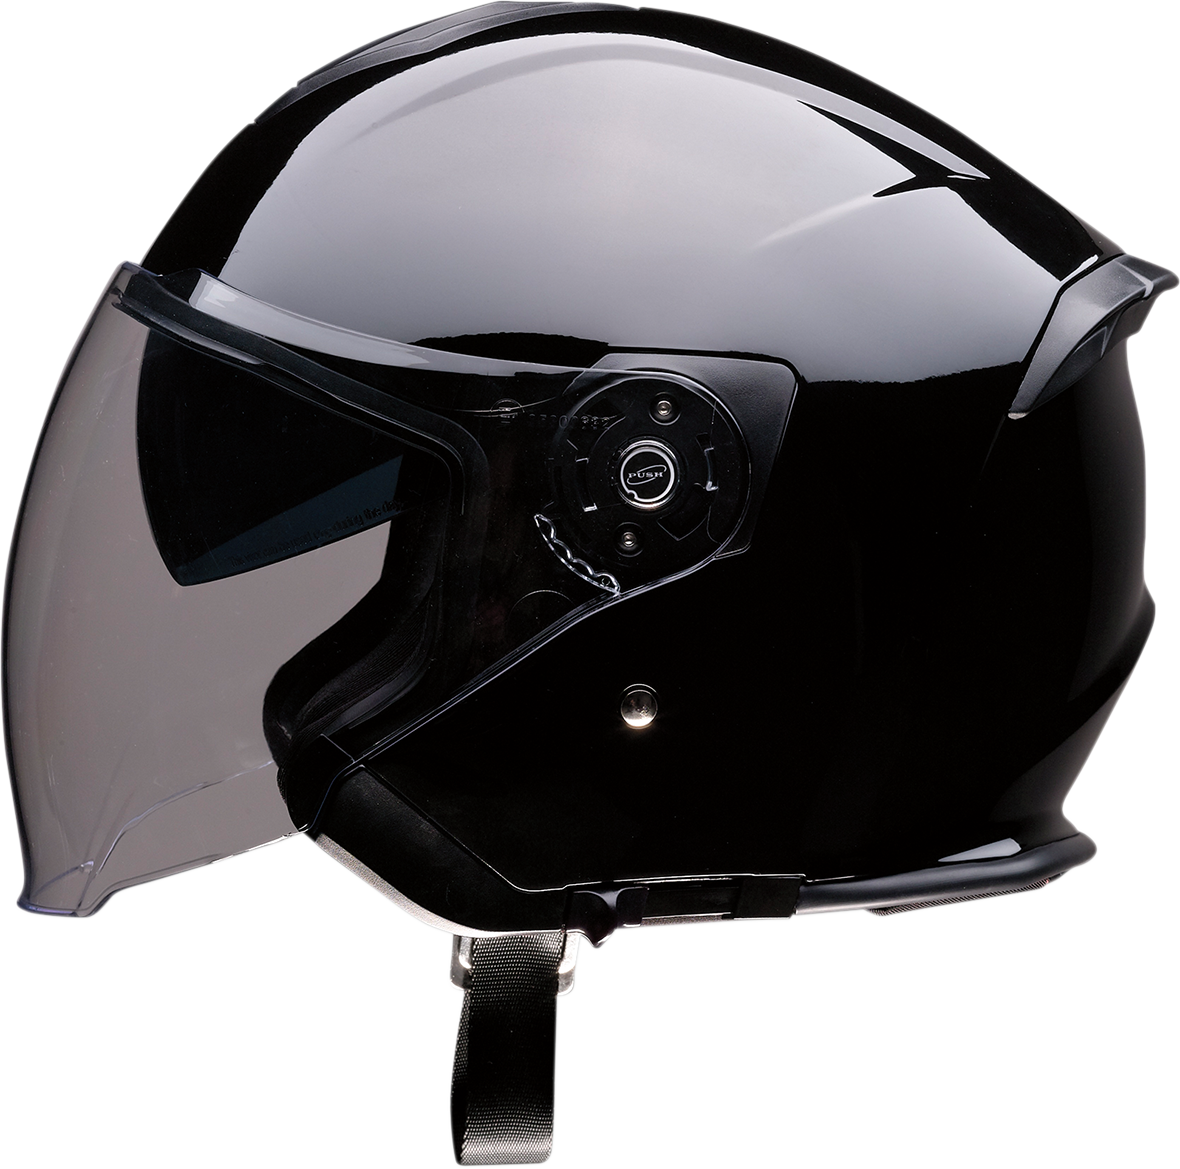 Z1R Road Maxx Unisex Adult Gloss Black Motorcycle 3/4 Open Face Riding Helmet